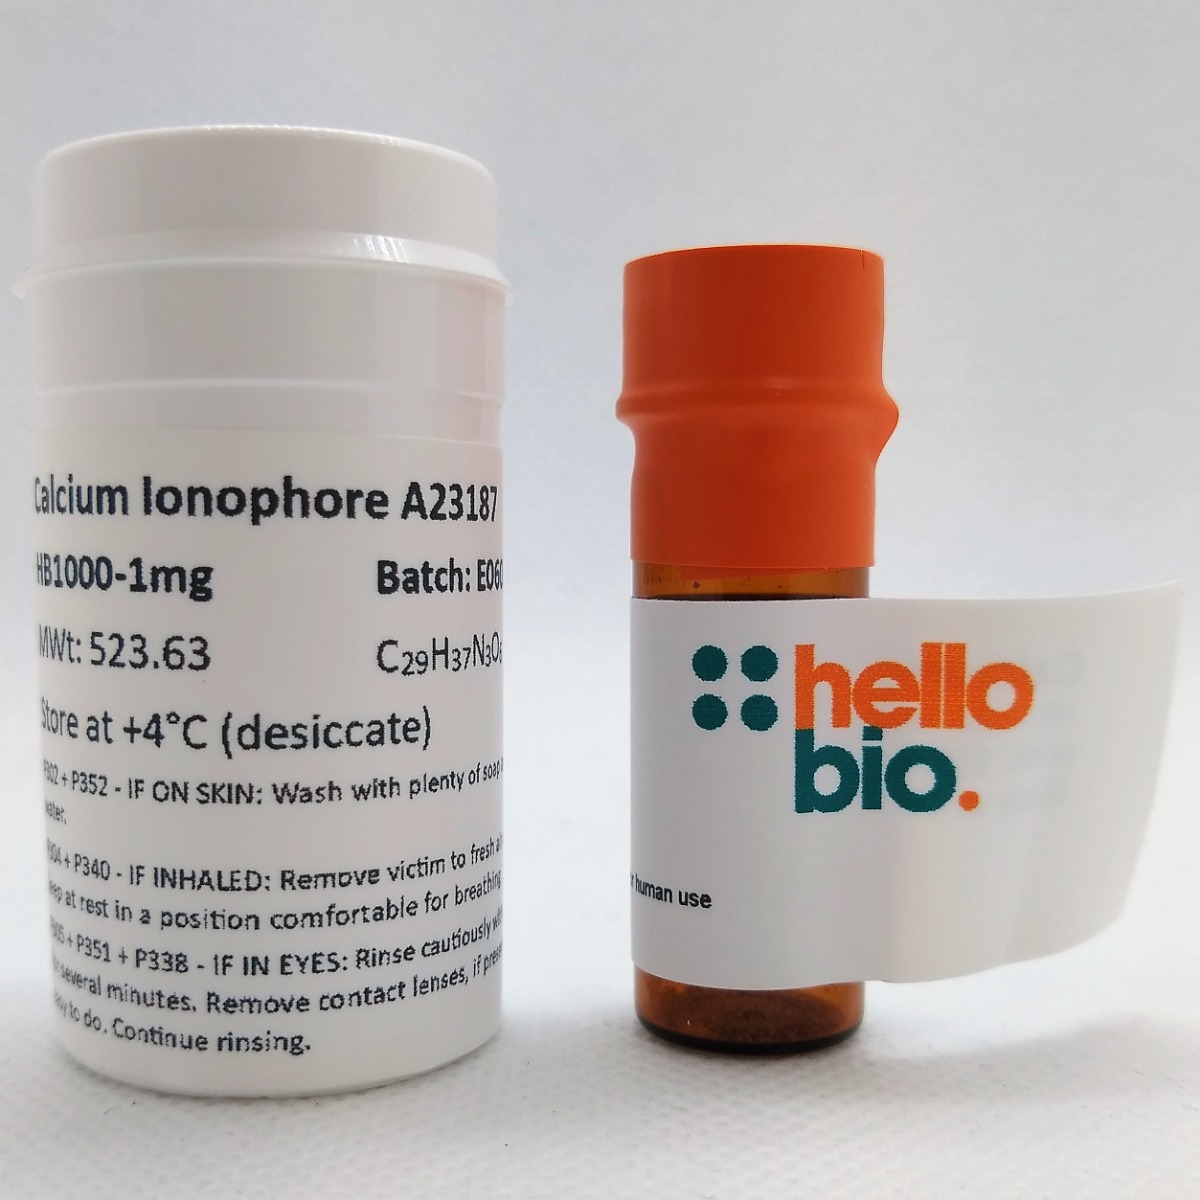 Calcium Ionophore A23187 product vial image | Hello Bio